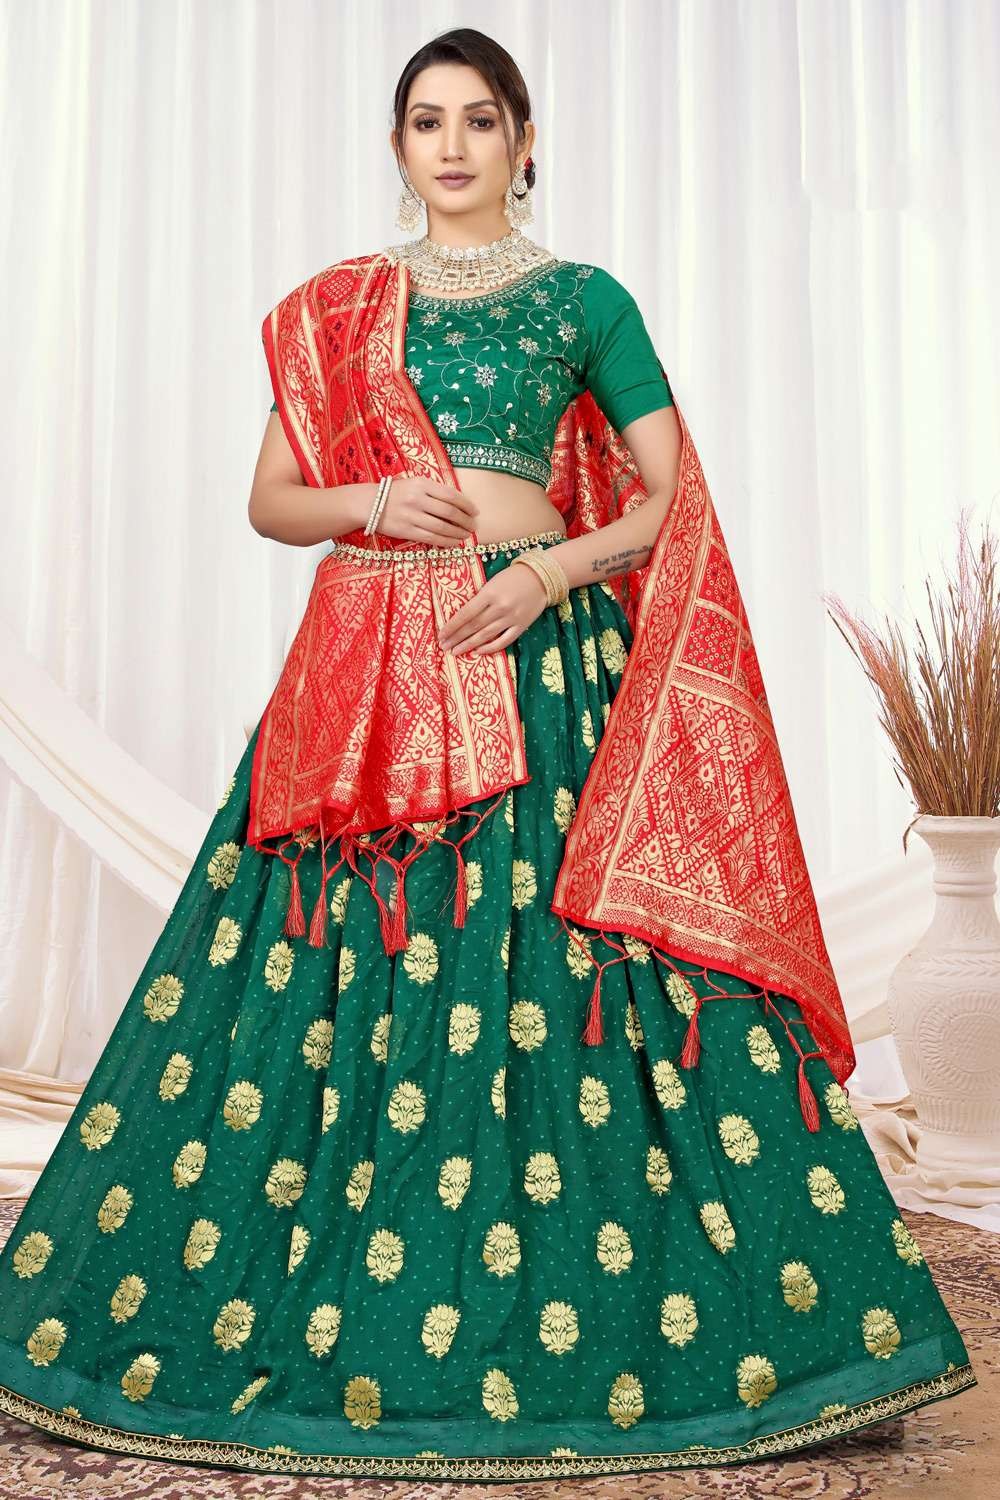 Red & White Bridal Lehenga With Green Bandhani Dupatta- Annu's Creation